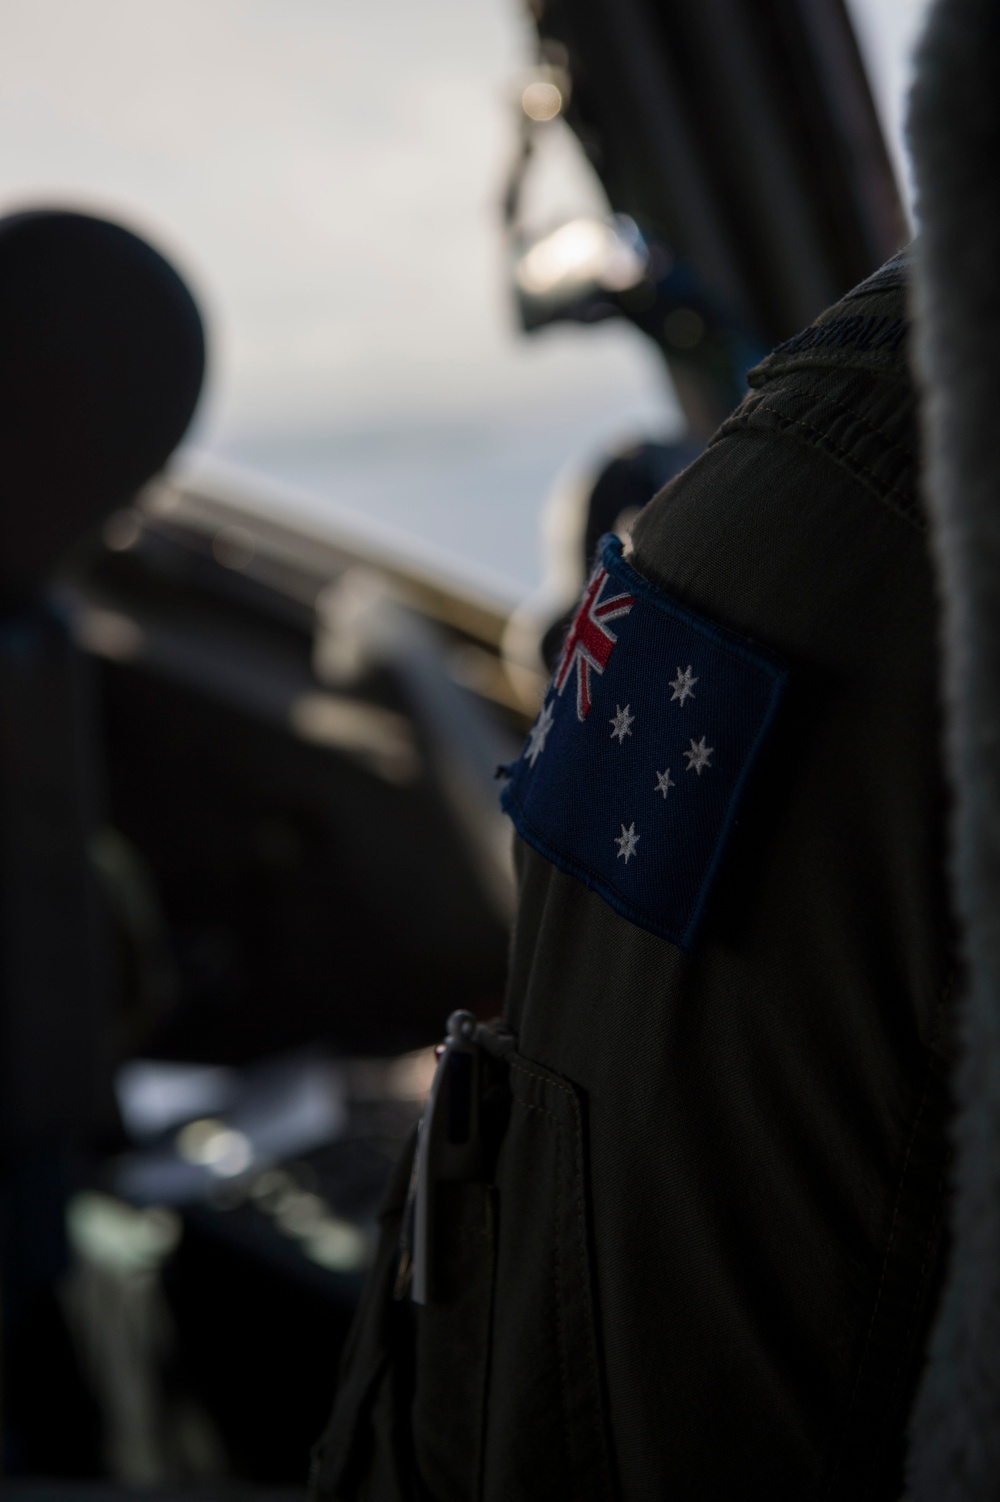 RAAF joins Tigers to enhance capabilities